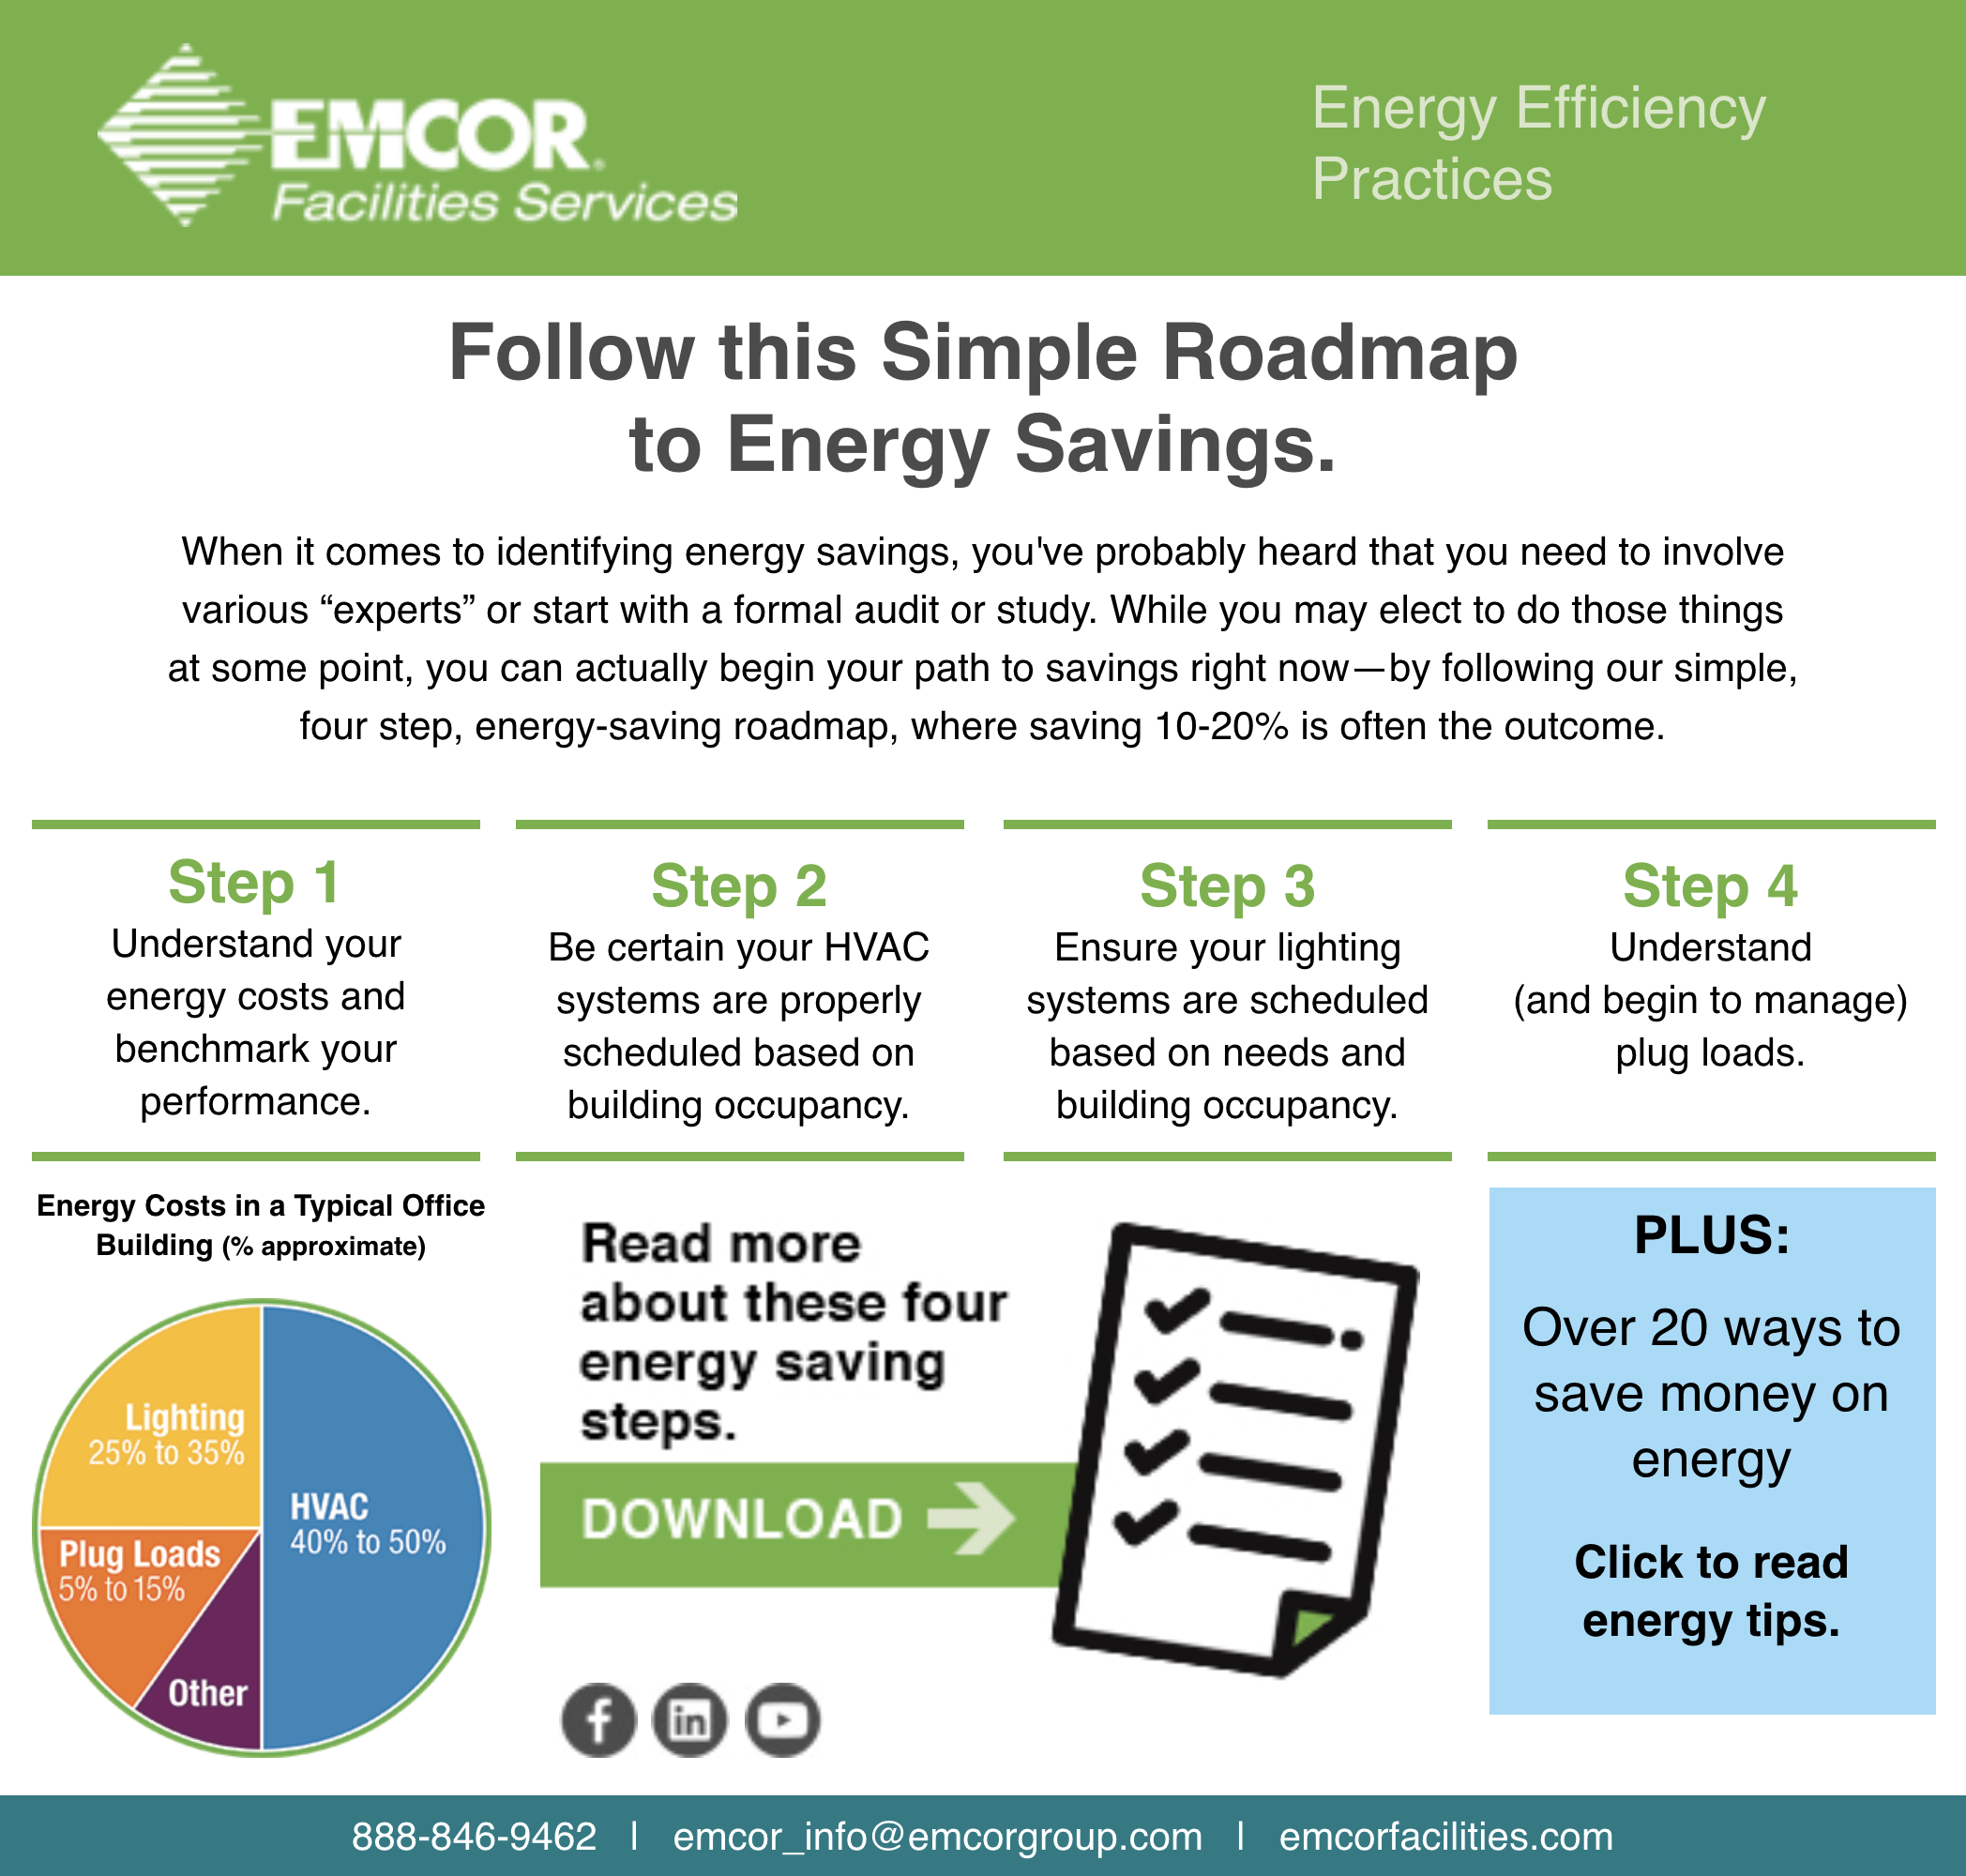 Follow this Simple Roadmap to Energy Savings.